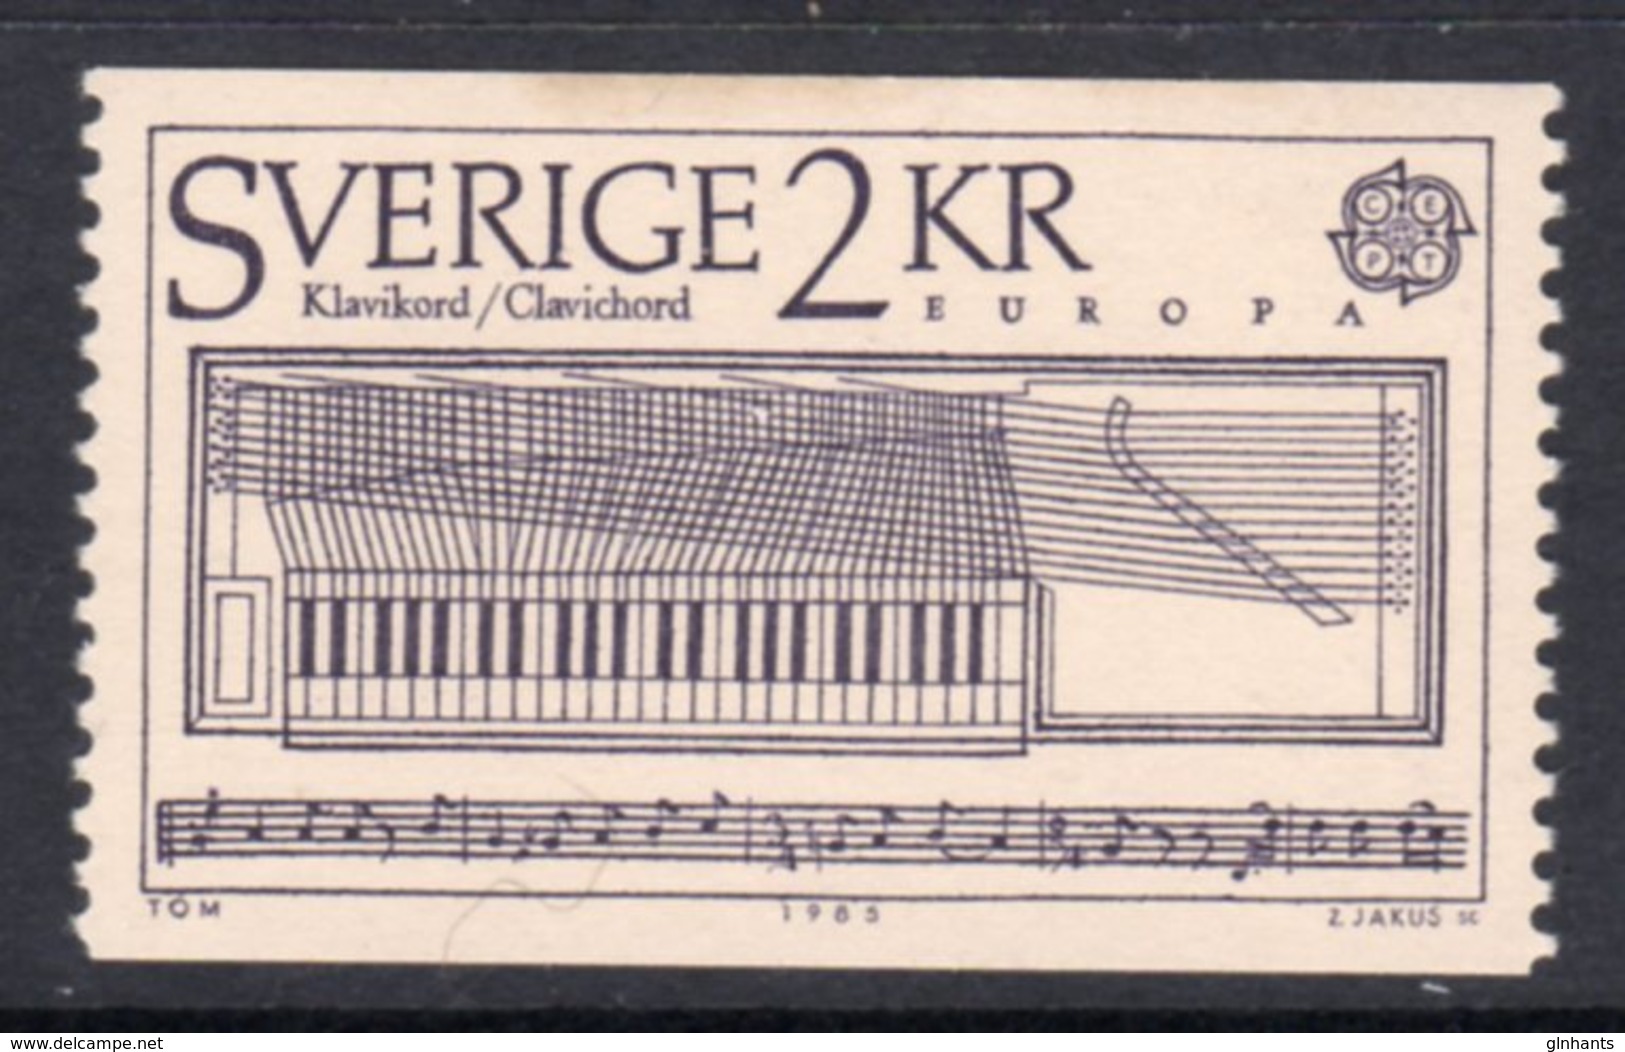 SWEDEN - 1985 EUROPA MUSIC YEAR 2kr STAMP FINE MNH ** SG 1250 - Unused Stamps